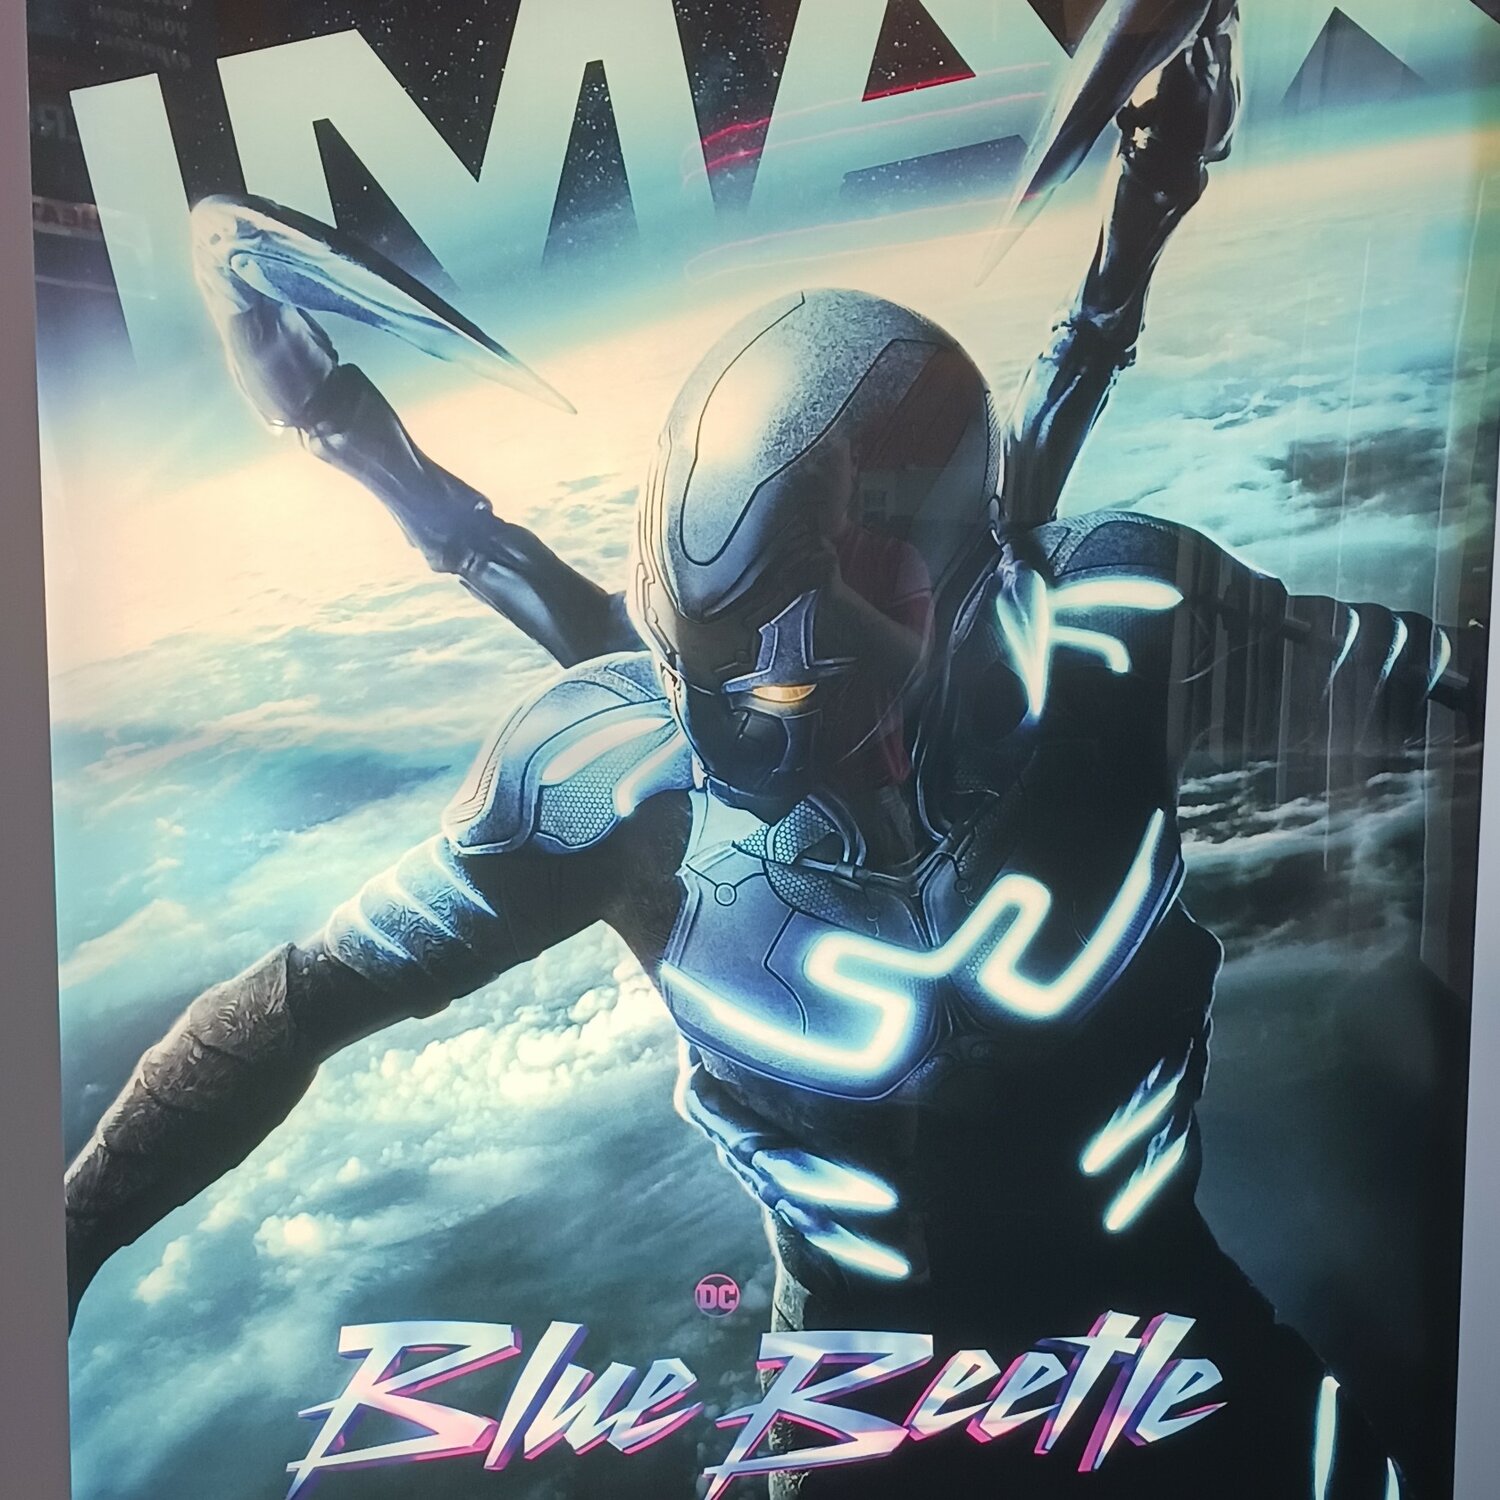 Blue Beetle movie poster.